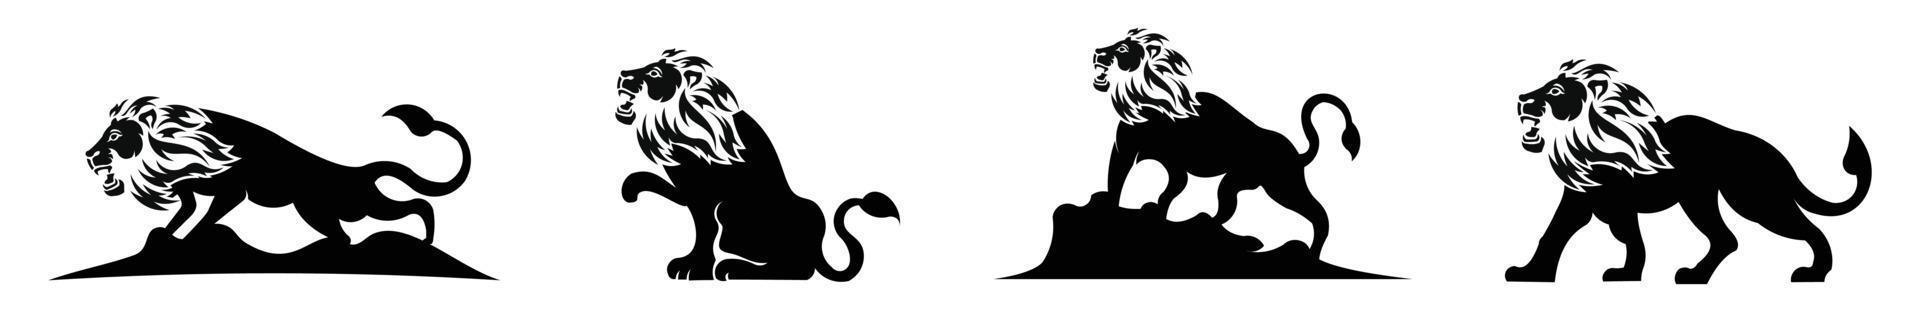 lion silhouette set.Lion wild animal silhouettes. Good use for symbol, logo, web icon, mascot. vector